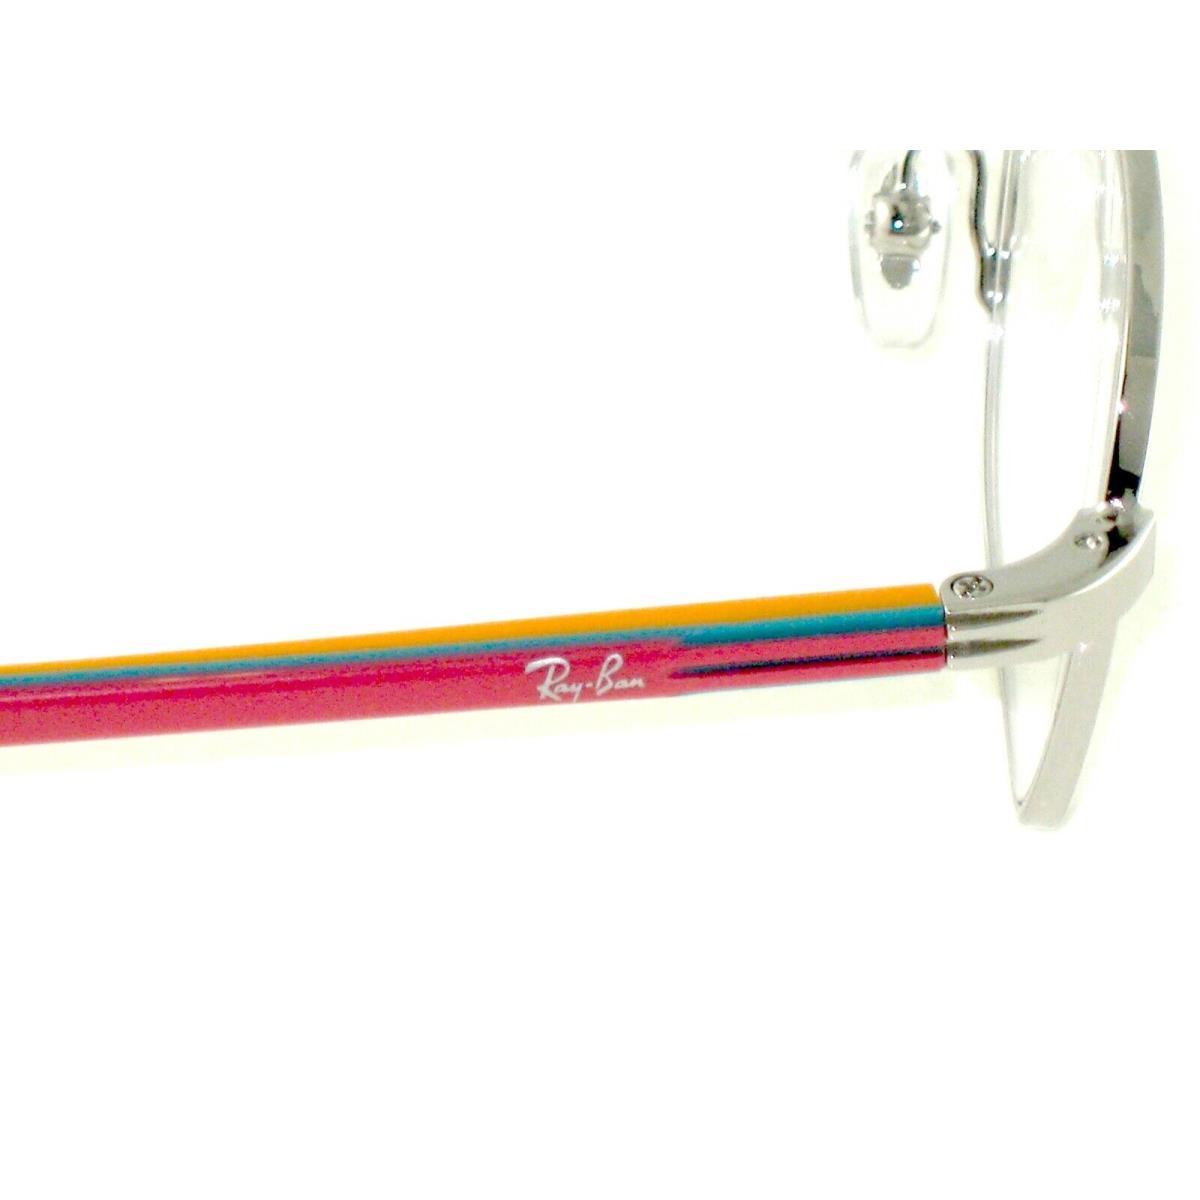 Ray-Ban eyeglasses  - Multi-Color Frame 3